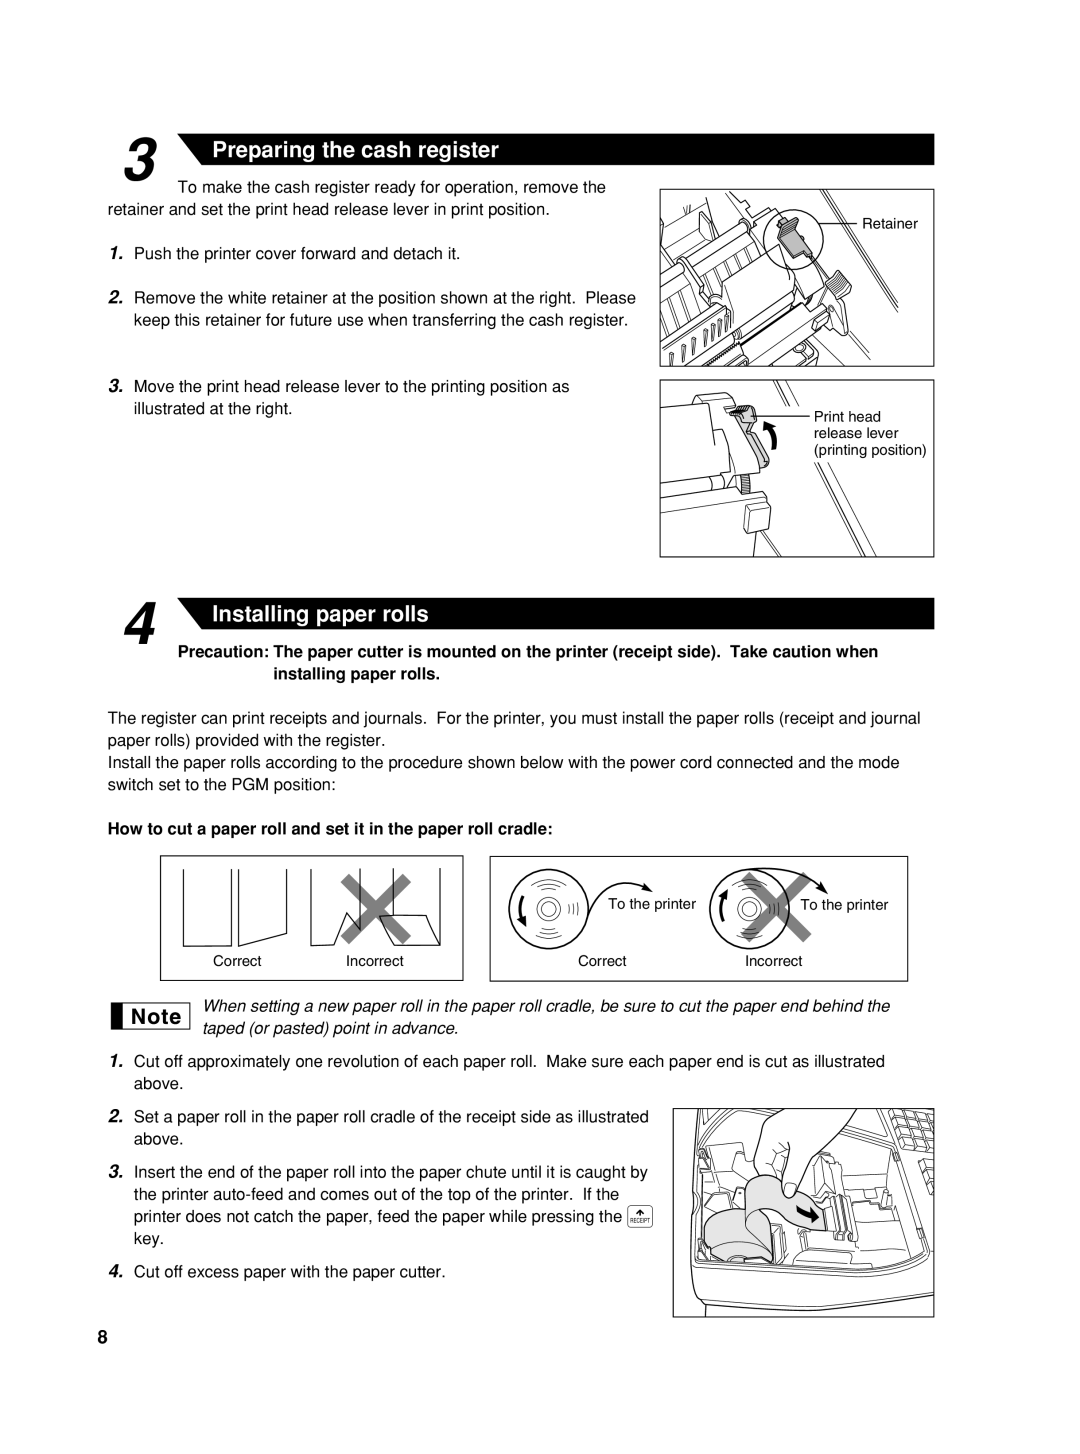 Sharp XE-A42S instruction manual Preparing the cash register, Installing paper rolls 